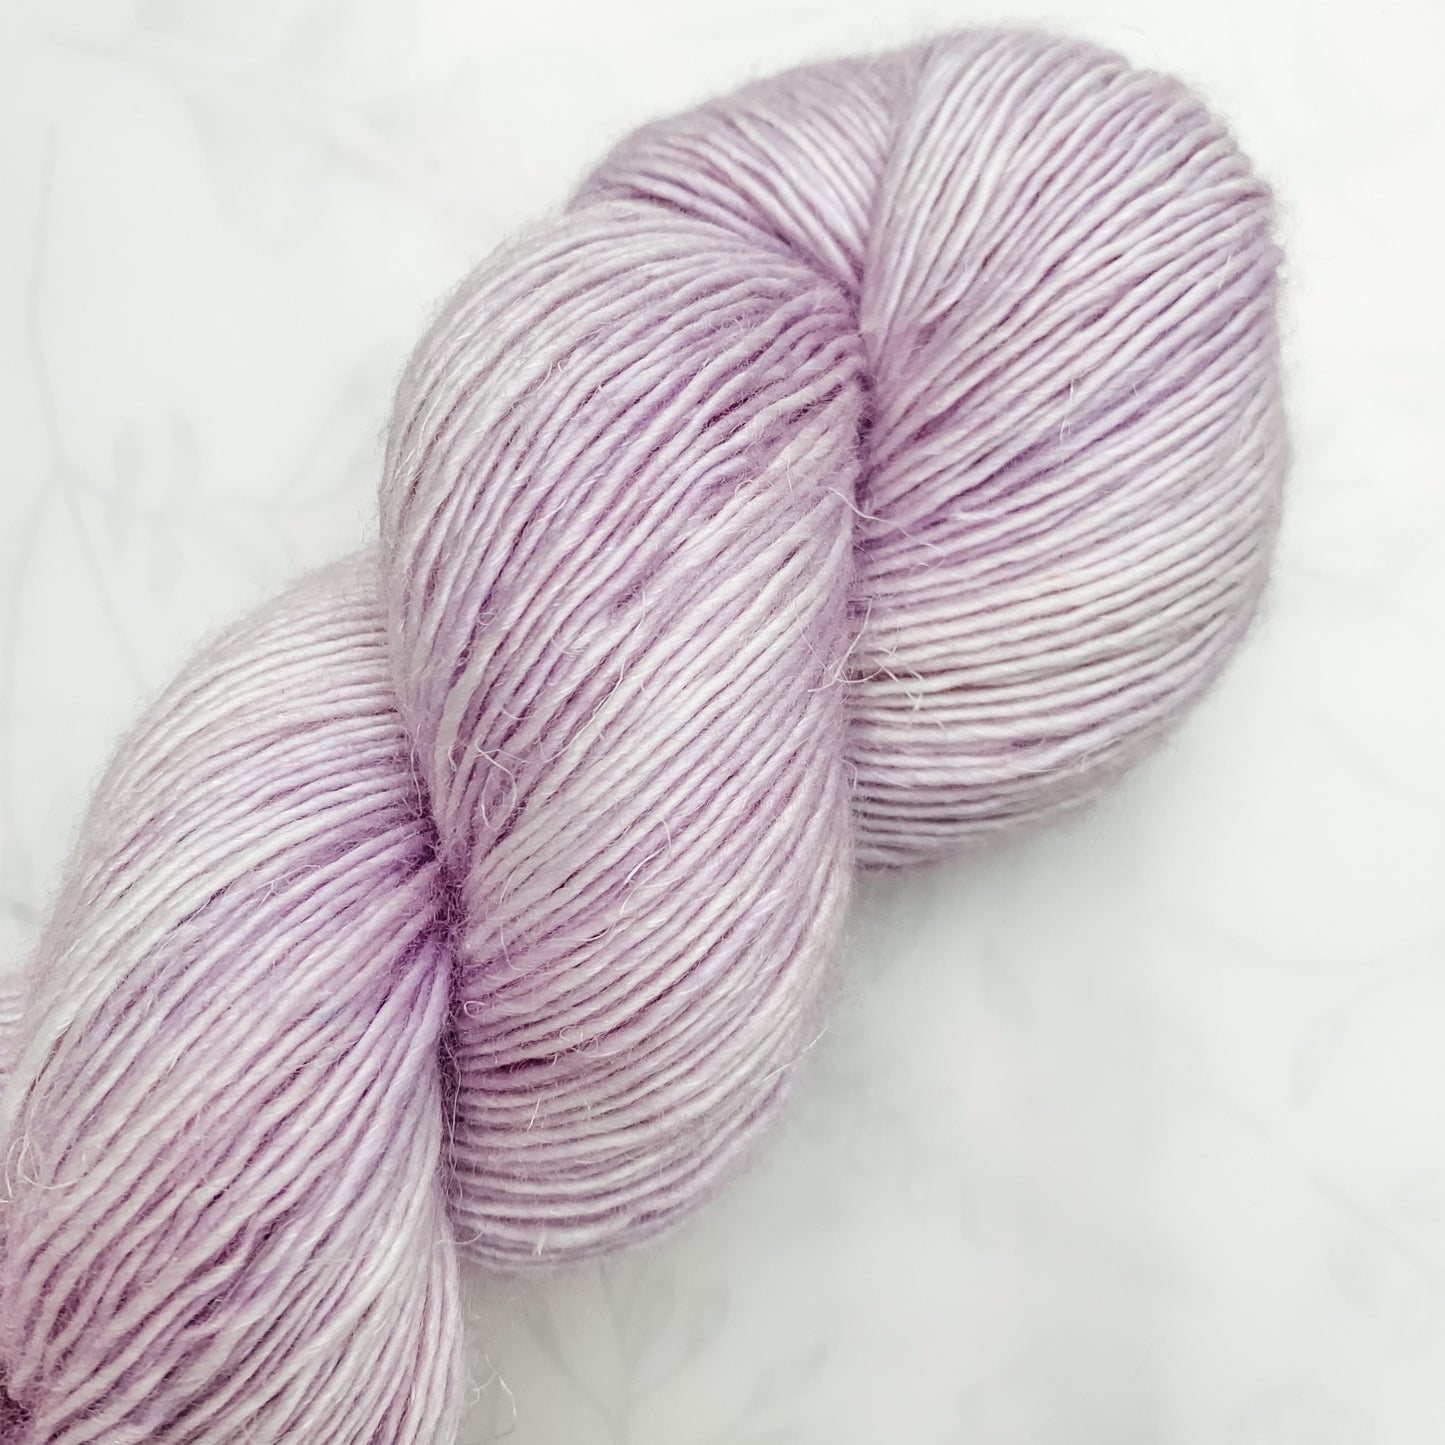 Valley - Lysefjord Single - Tonal Yarn - Hand dyed yarn